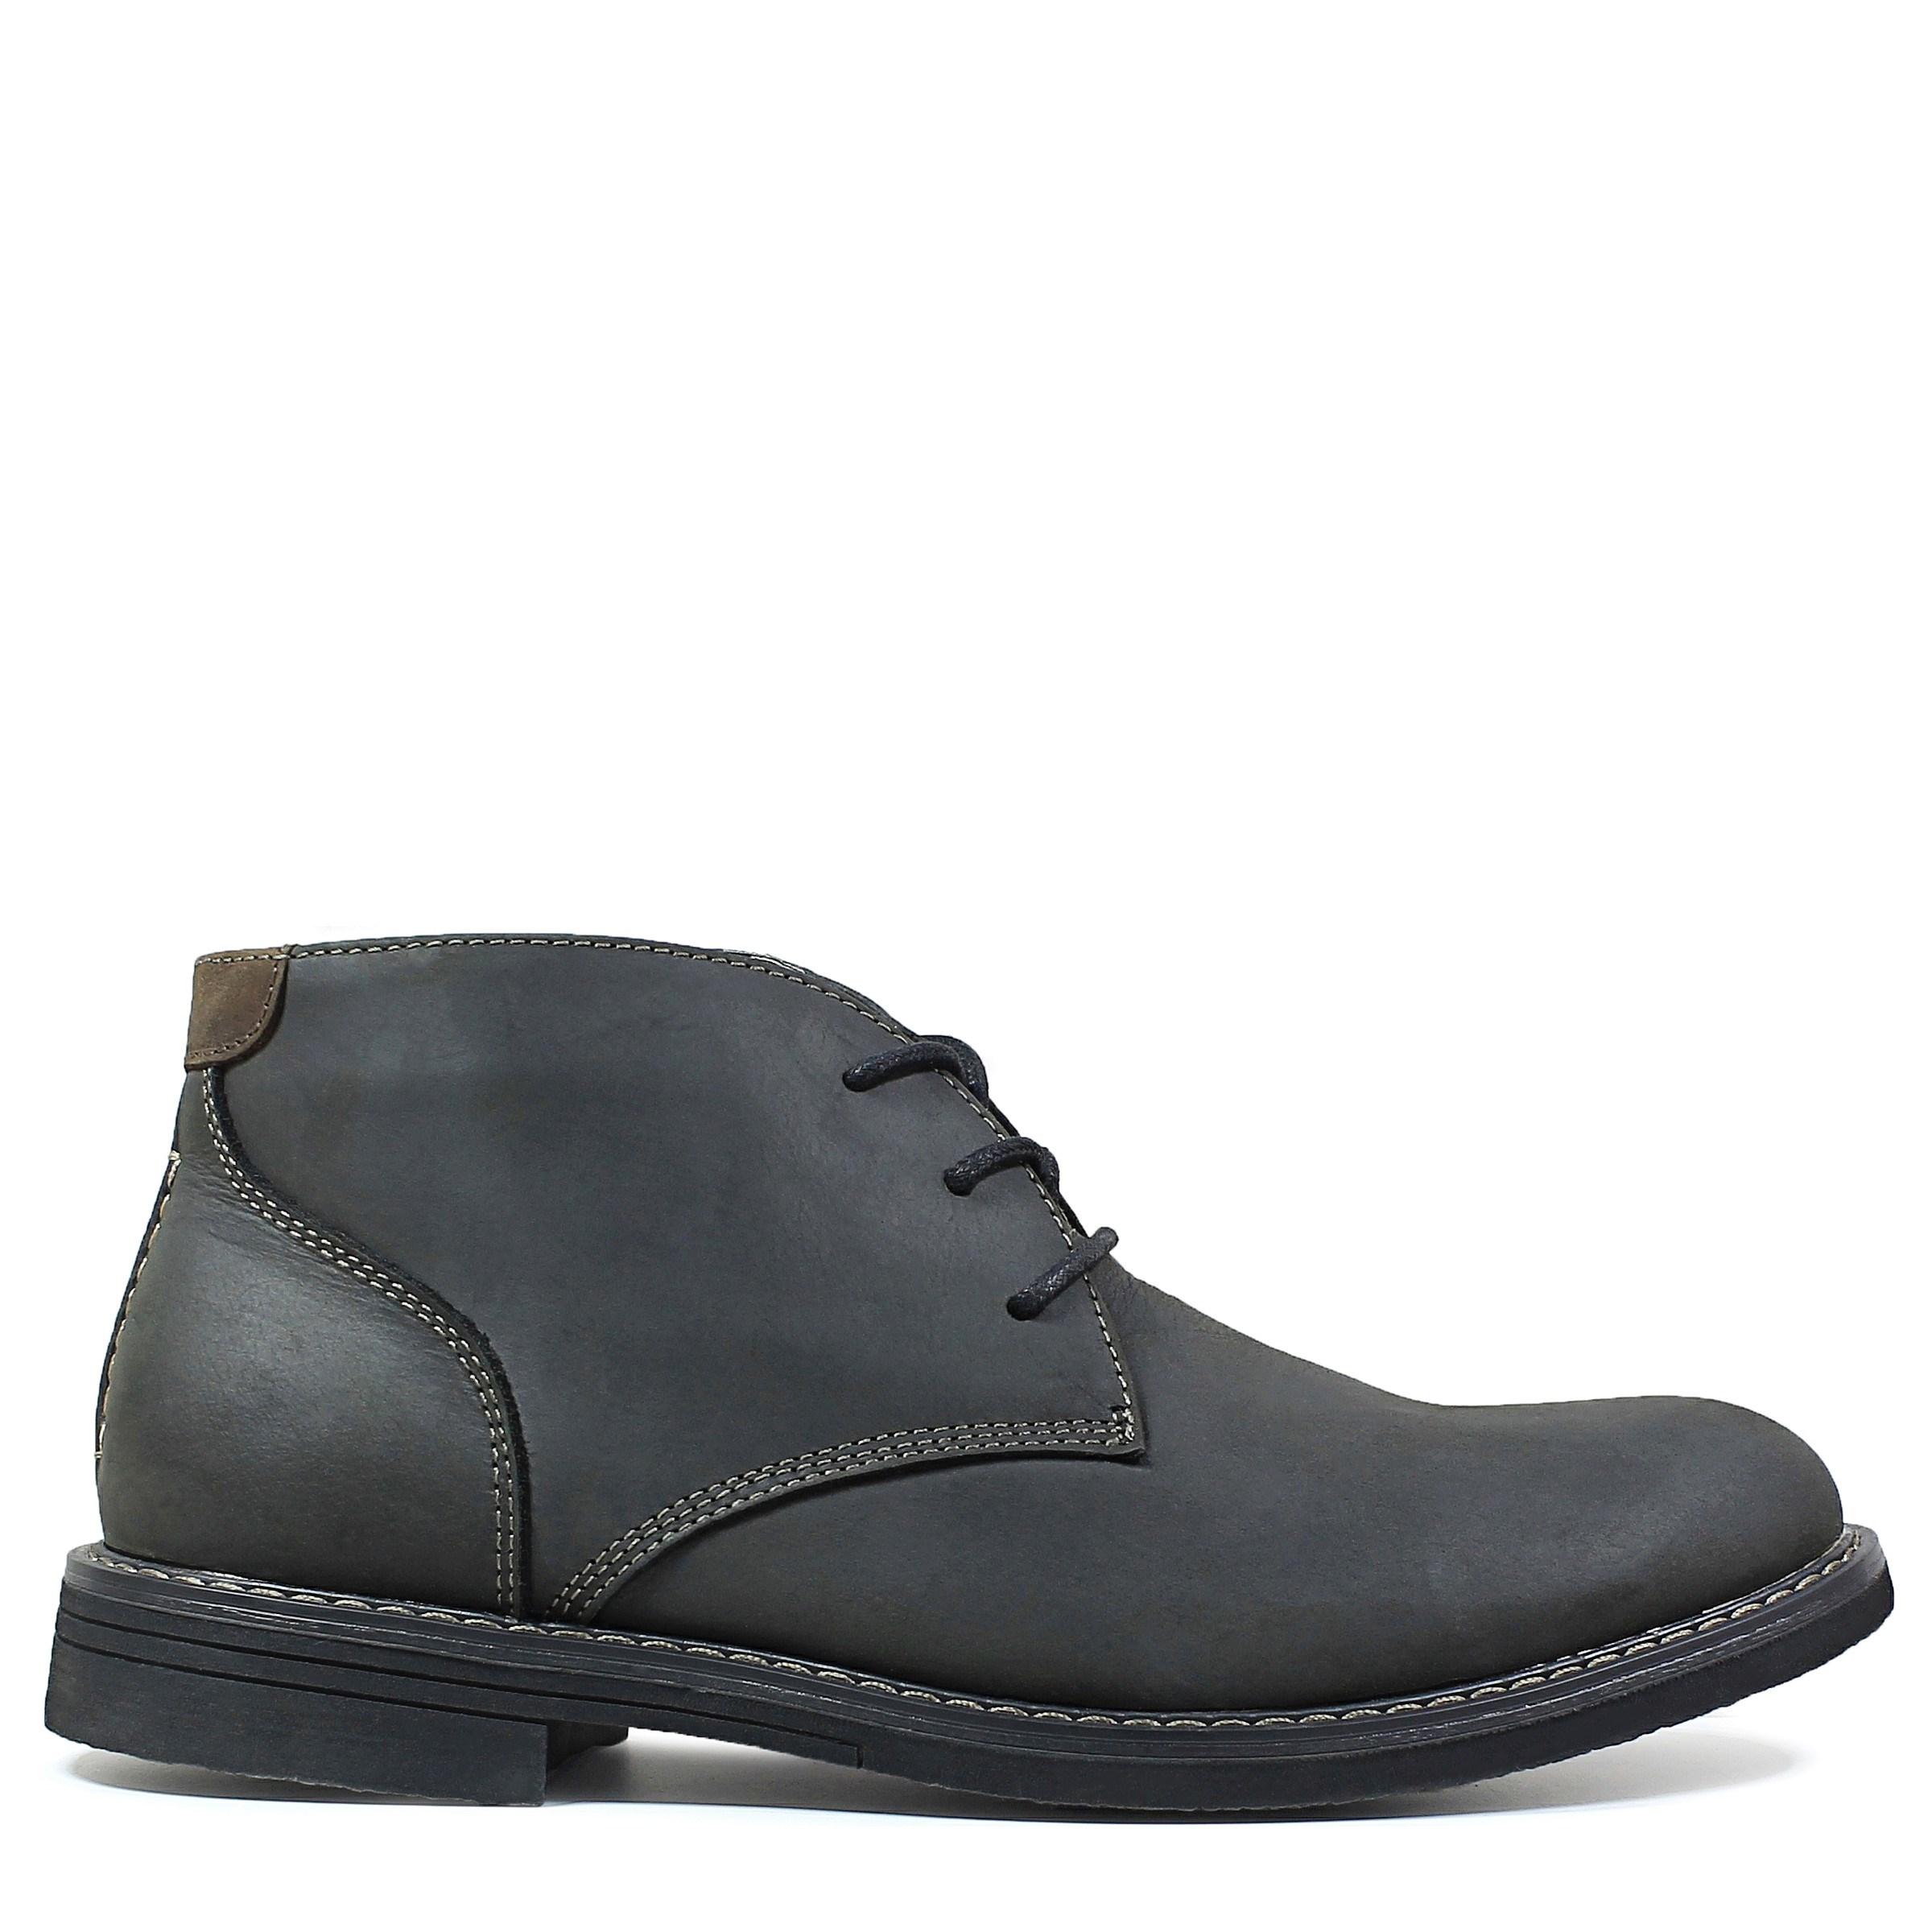 Nunn Bush Leather Lancaster Medium/wide Plain Toe Chukka Boots in Black ...